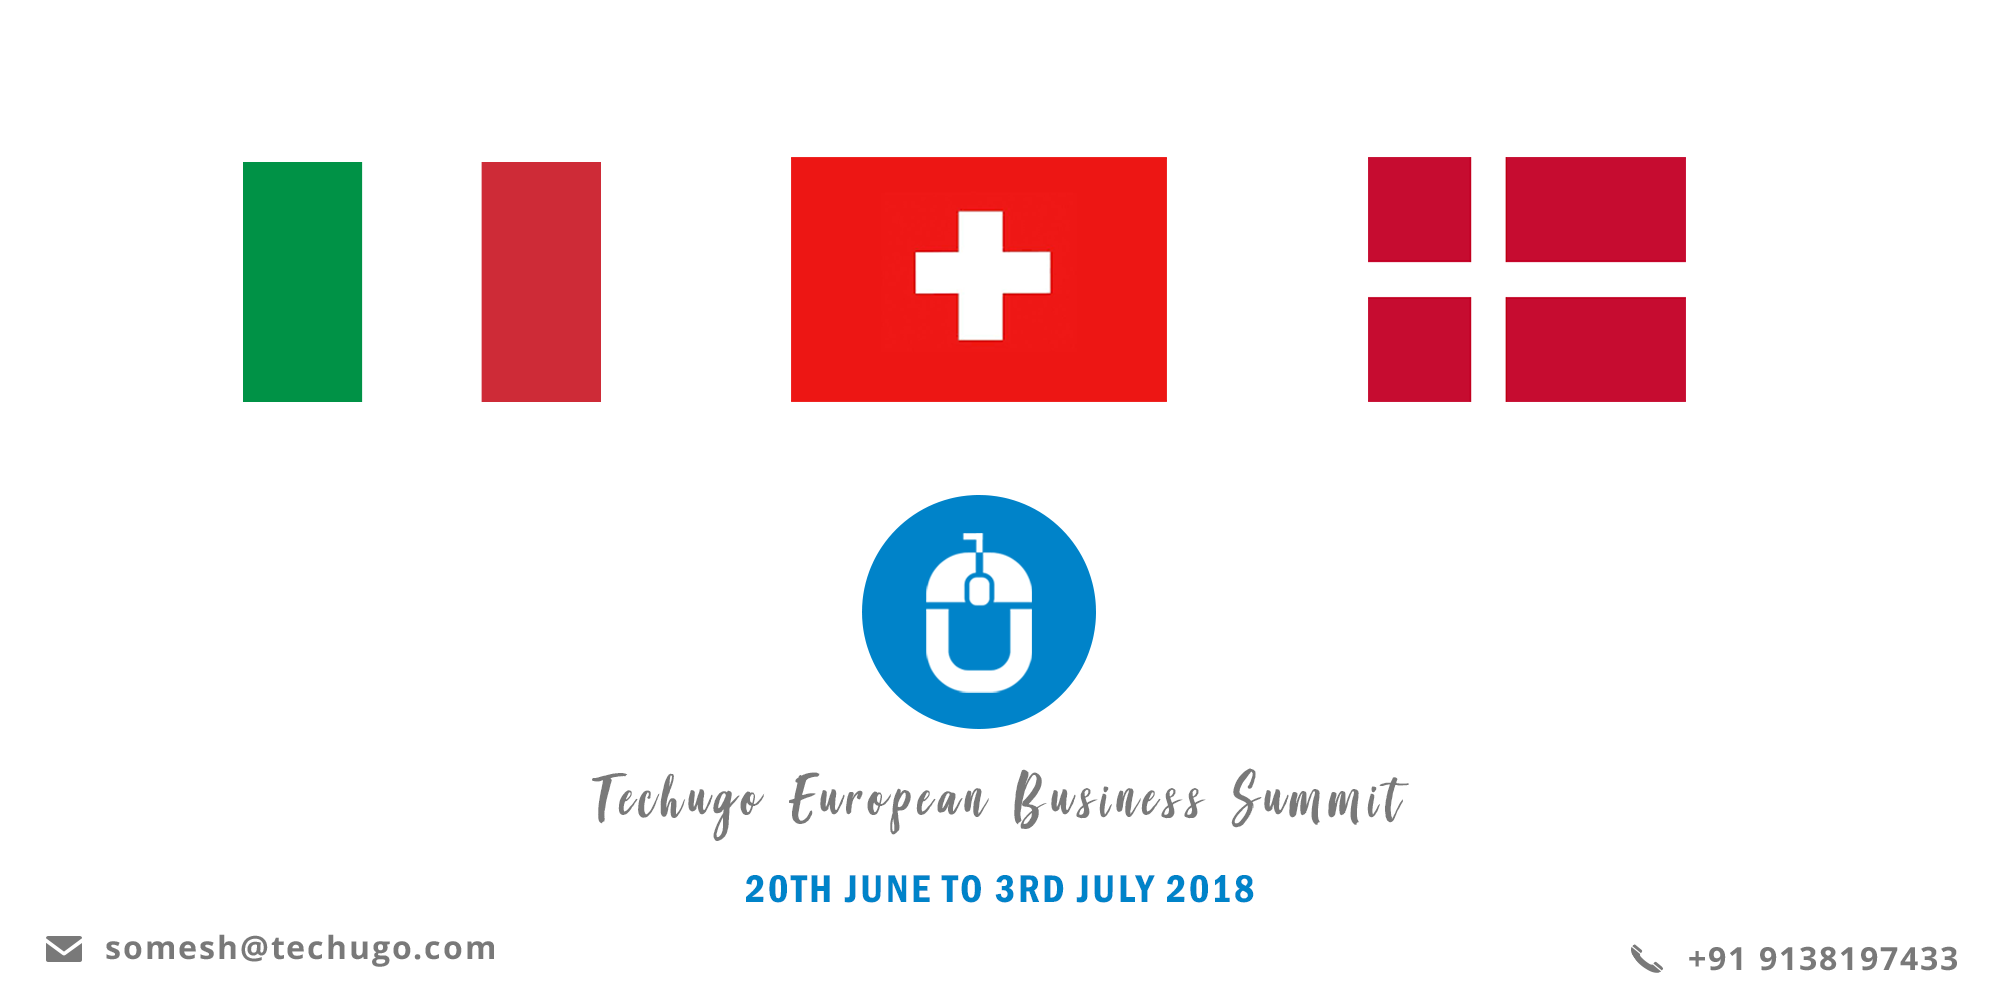 Techugo European Business Summit